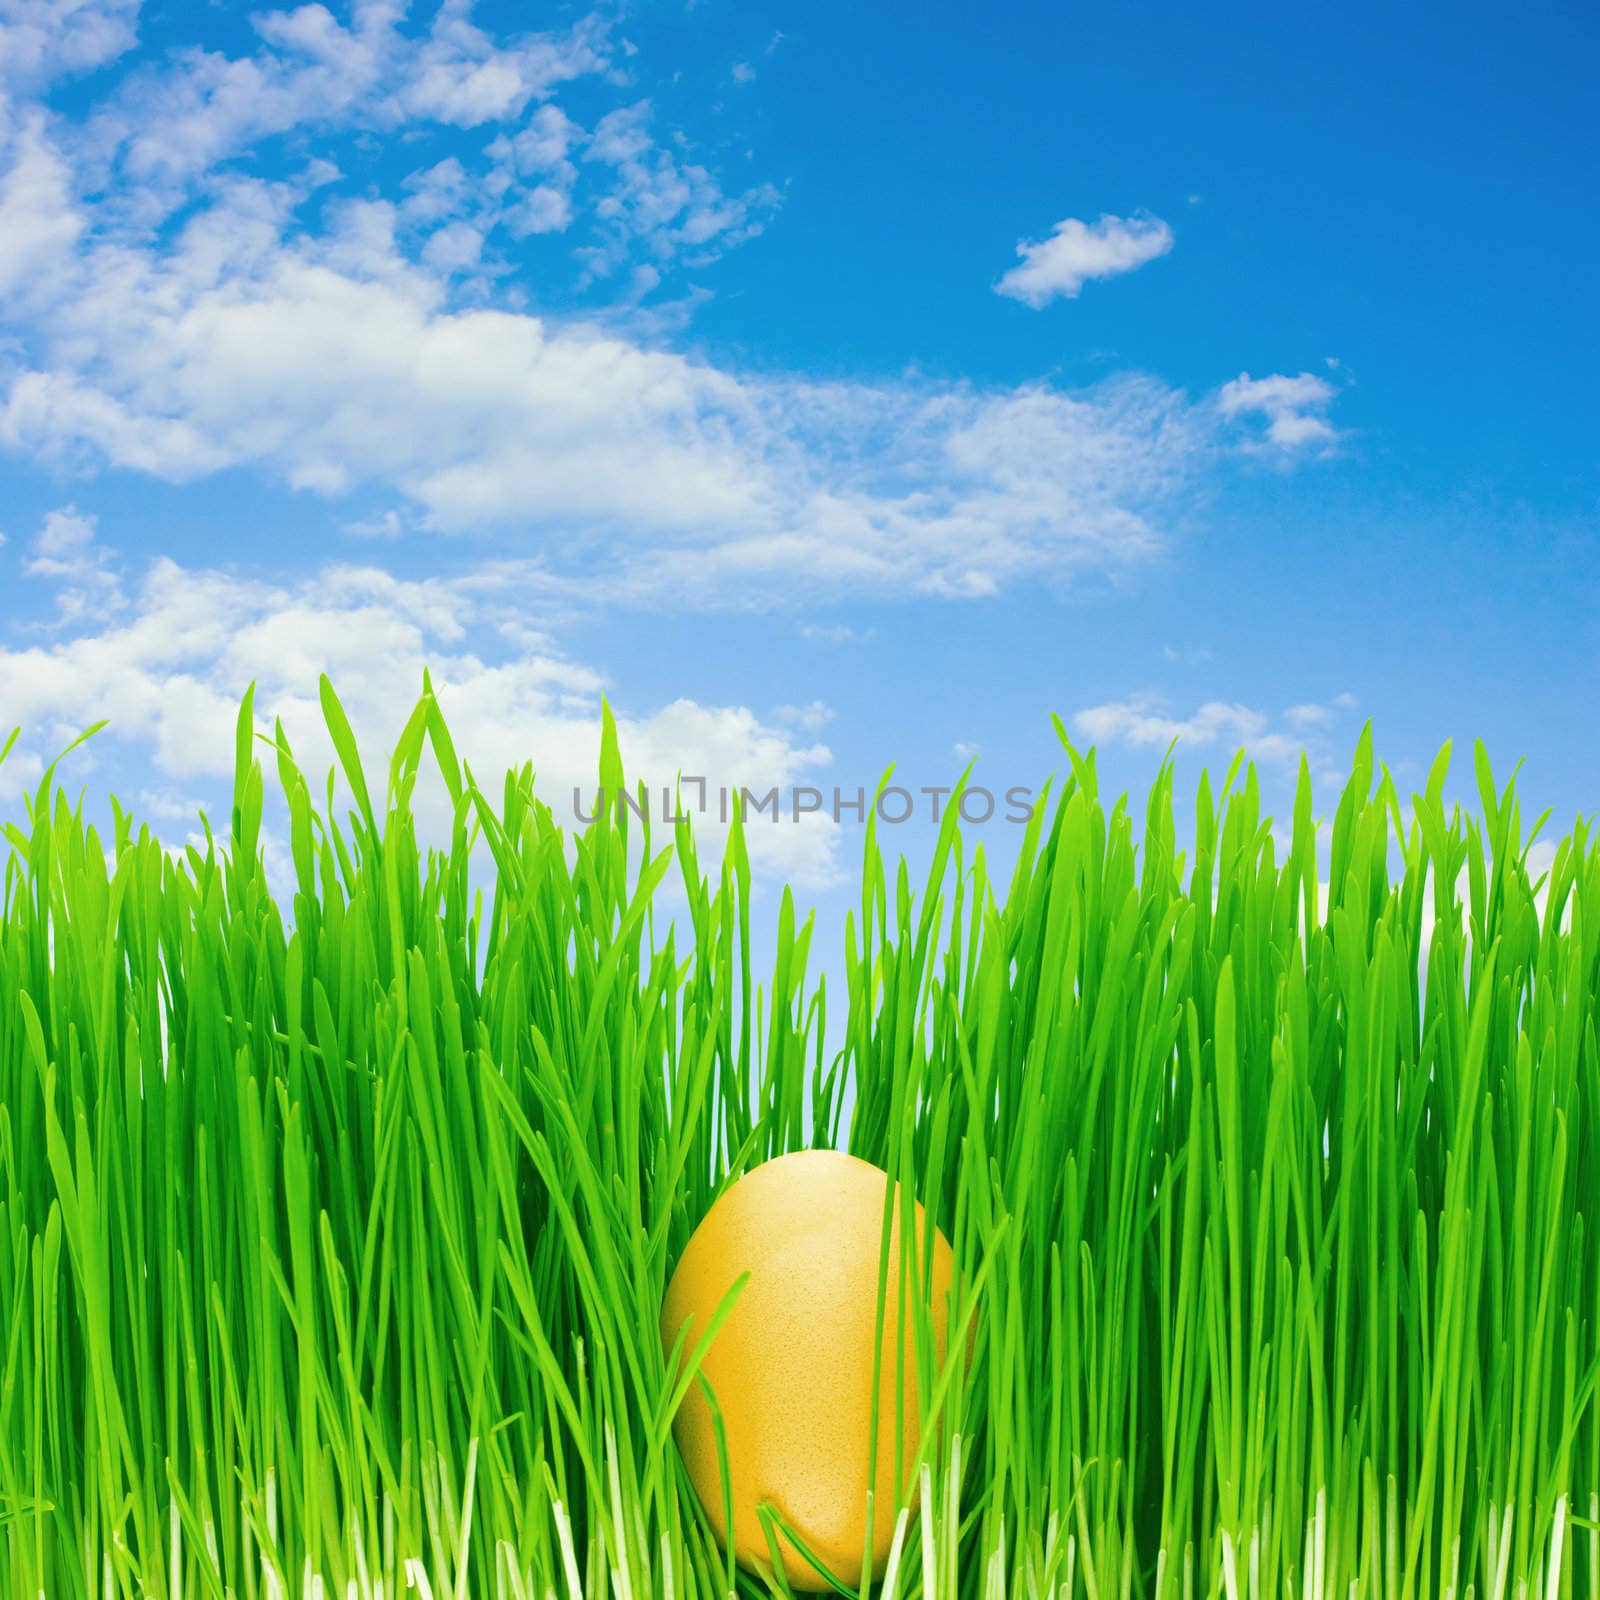 egg in the grass, blue sky